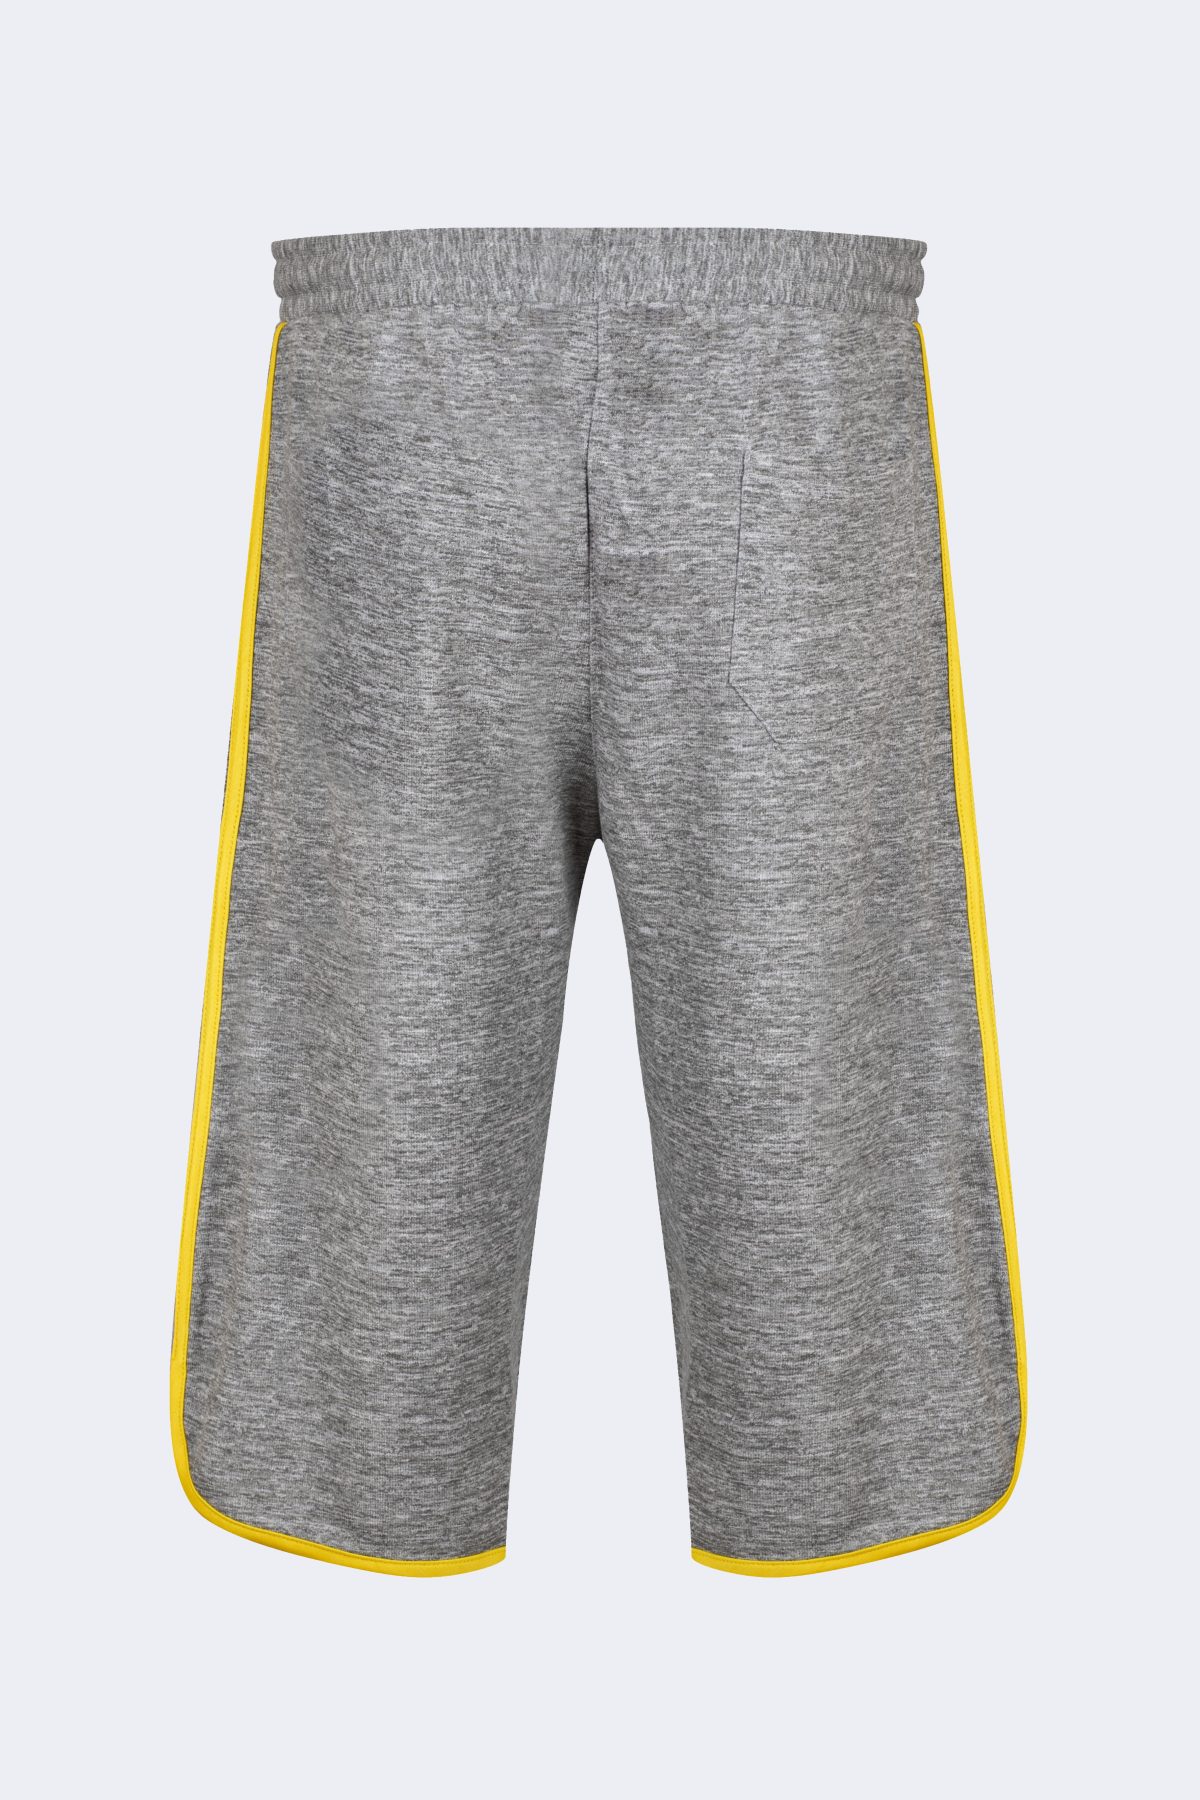 Classic, embroidery logo printed Men's Capri – Grey-Yellow-4230